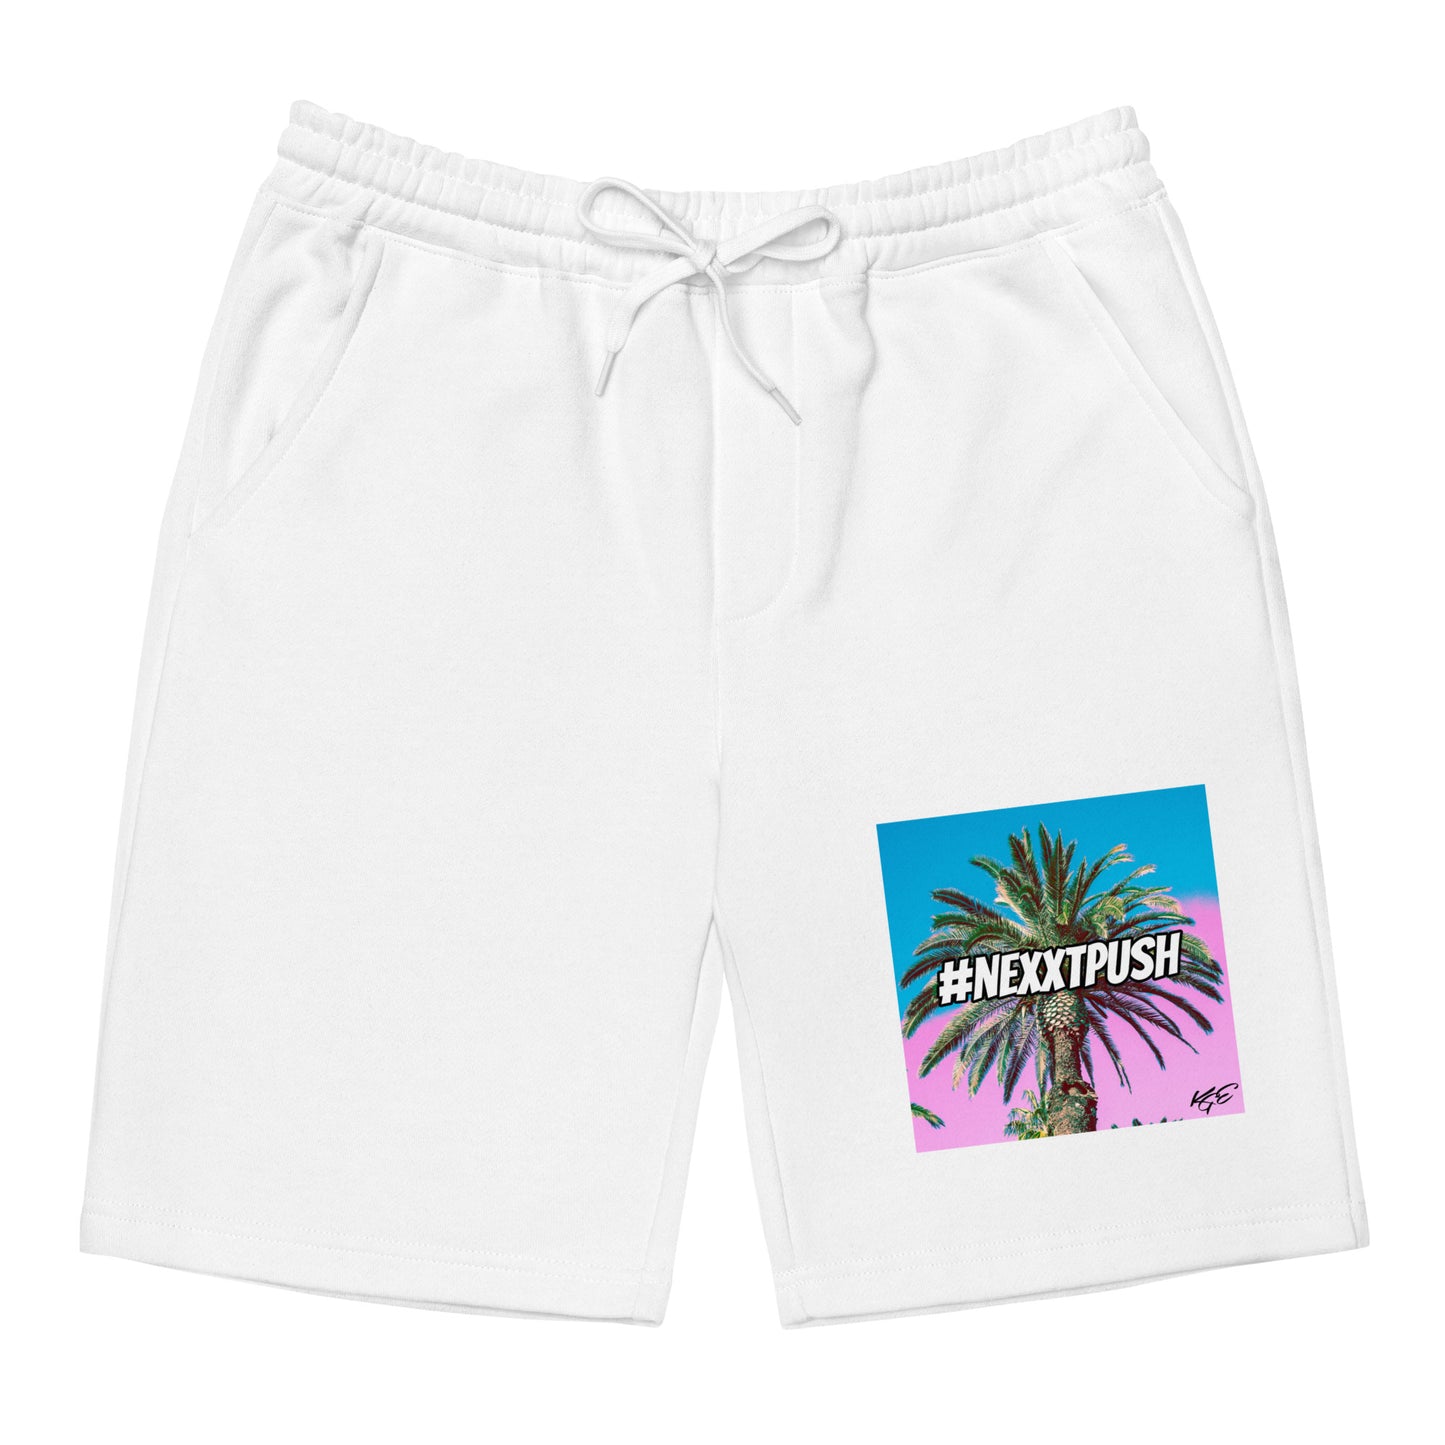 (New) #Nexxtpush Palm Paradise Men's fleece shorts